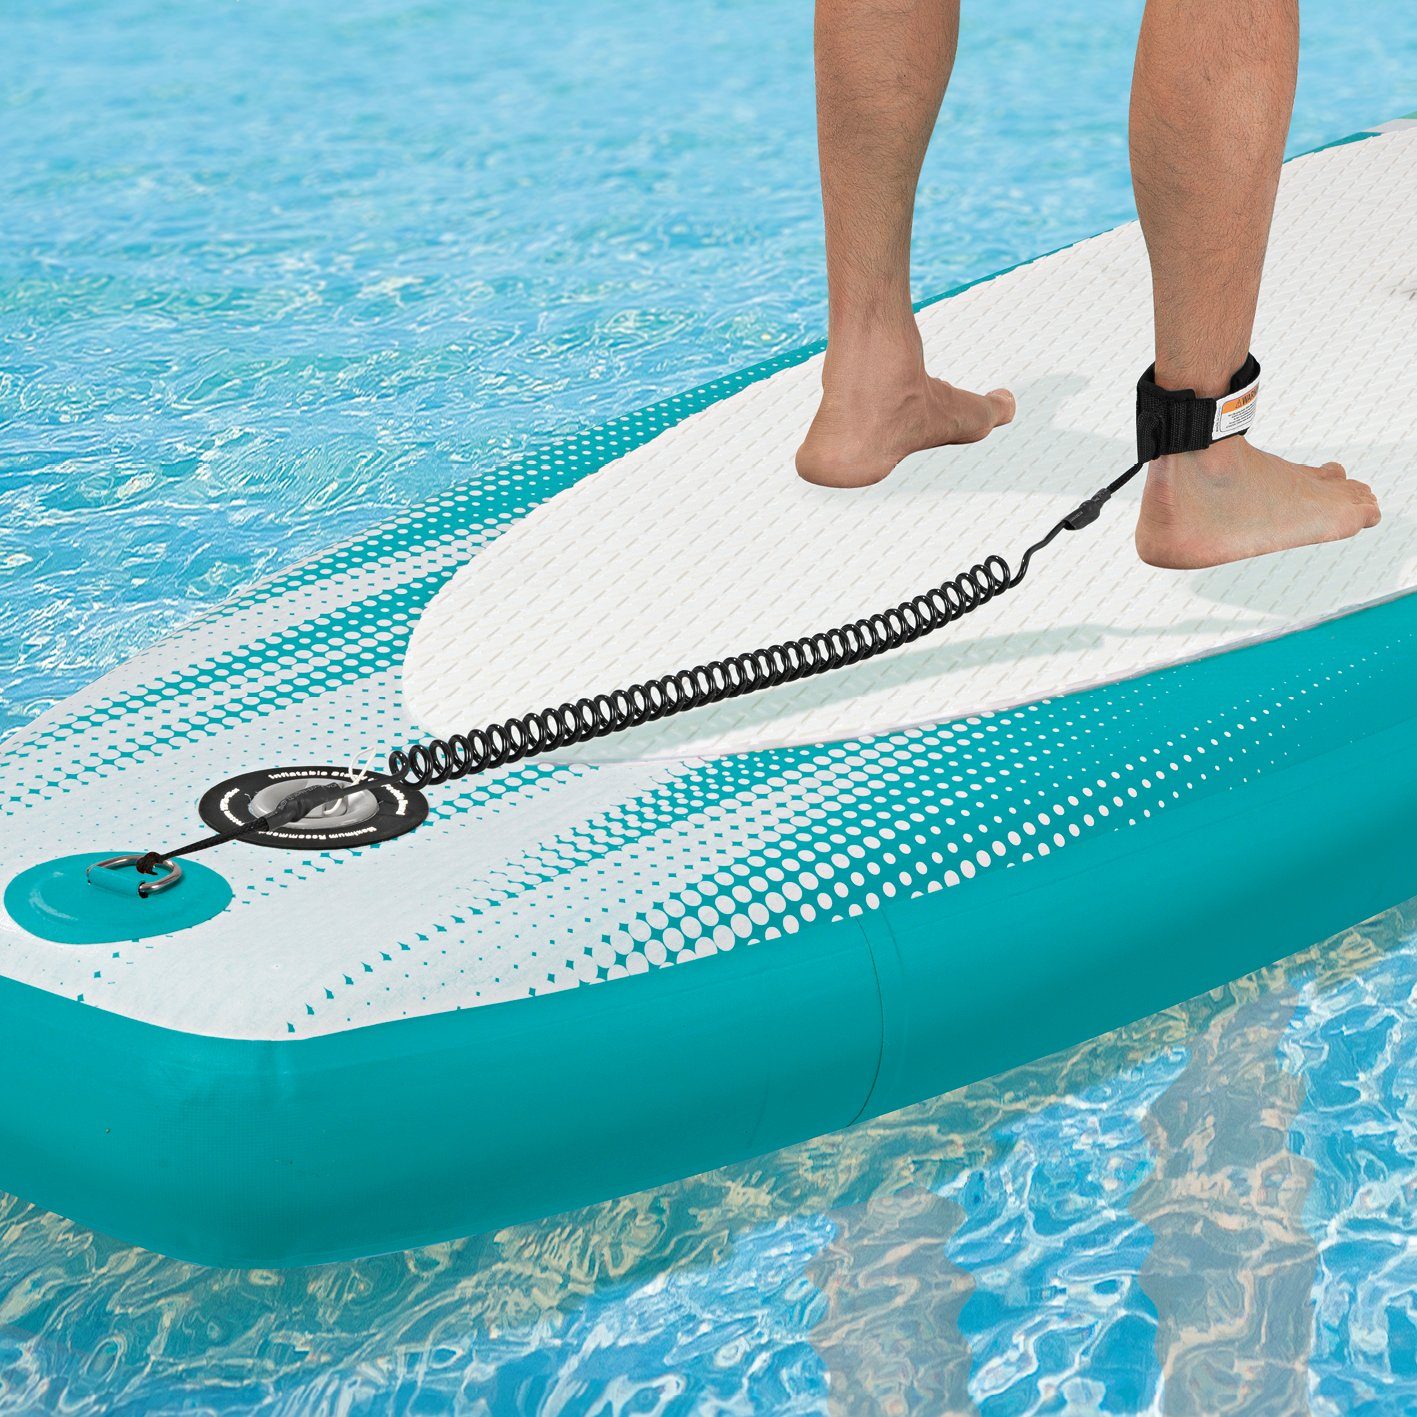 SUP Board 300 cm, inkl. Paddel Set Komplett up Paddling Paddle-Board kg, MAXXMEE Stand türkis/weiß Stand-Up Inflatable 110 SUP-Board Zubehör,